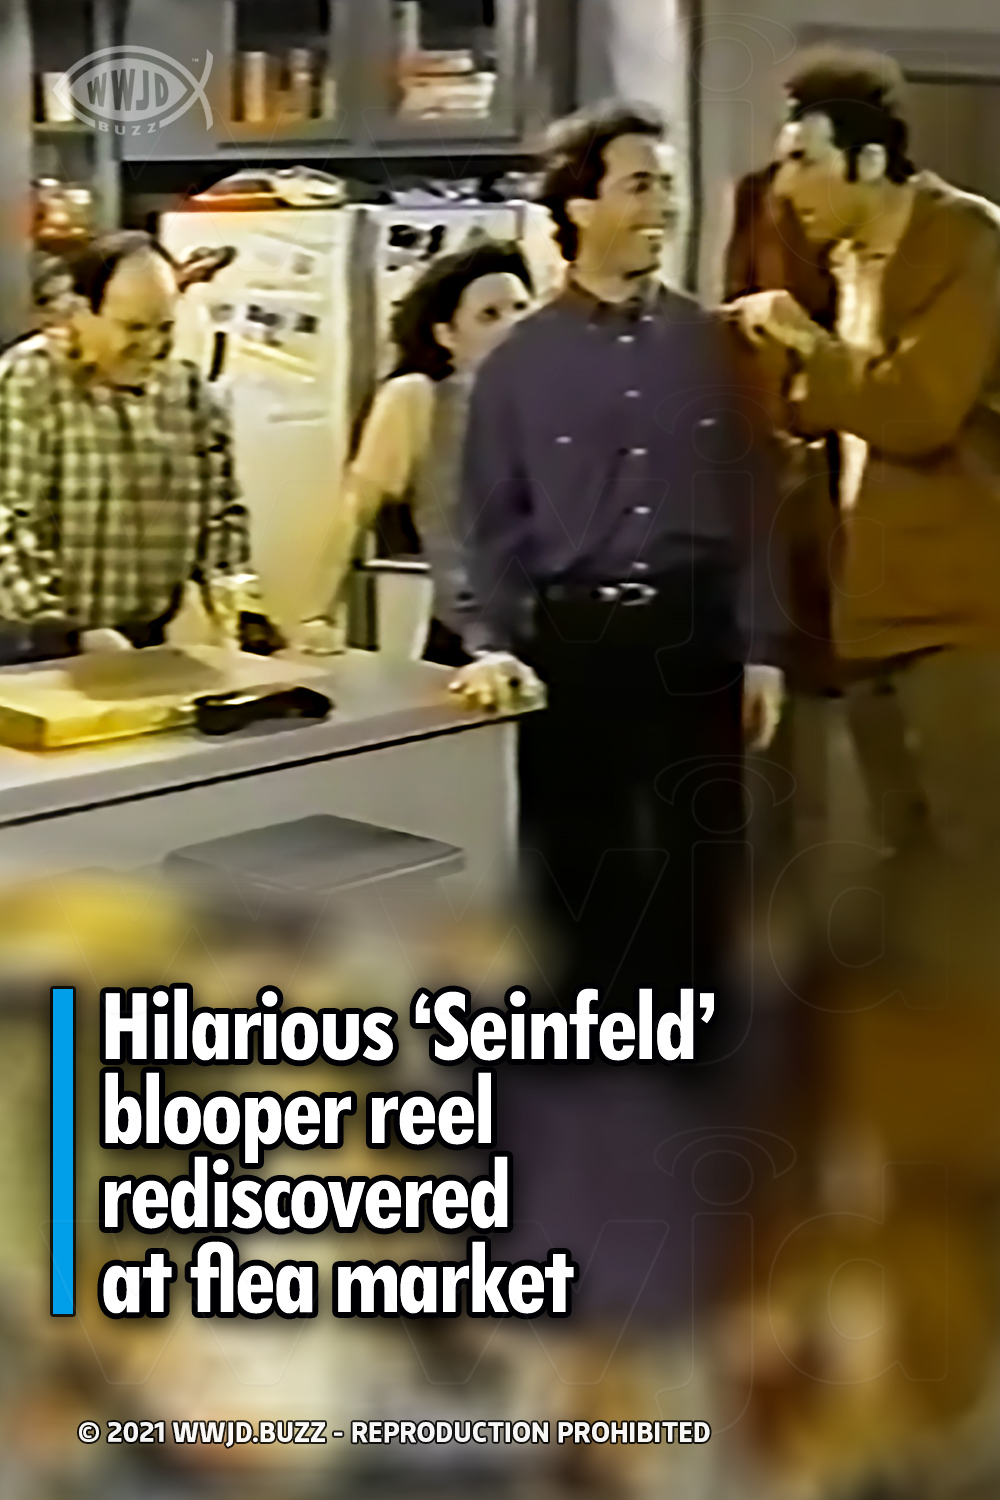 Hilarious ‘Seinfeld’ blooper reel rediscovered at flea market